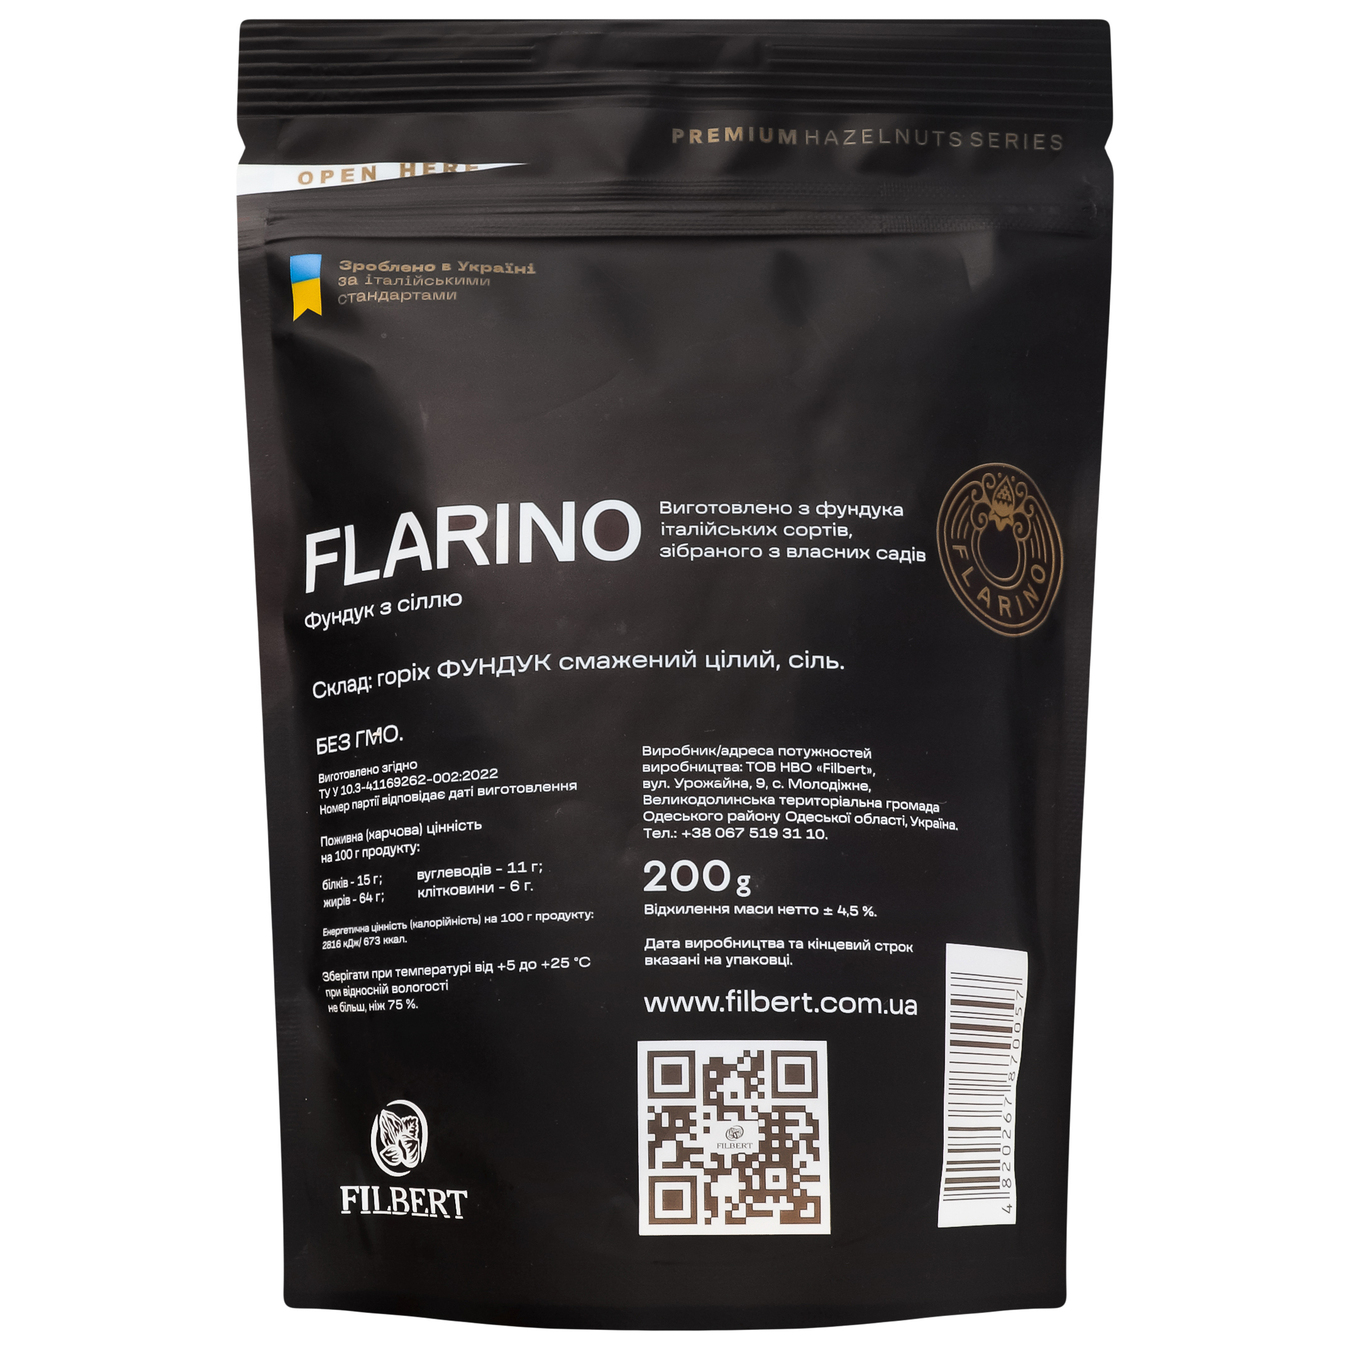 Фундук з сіллю Flarino д/п 200г 2